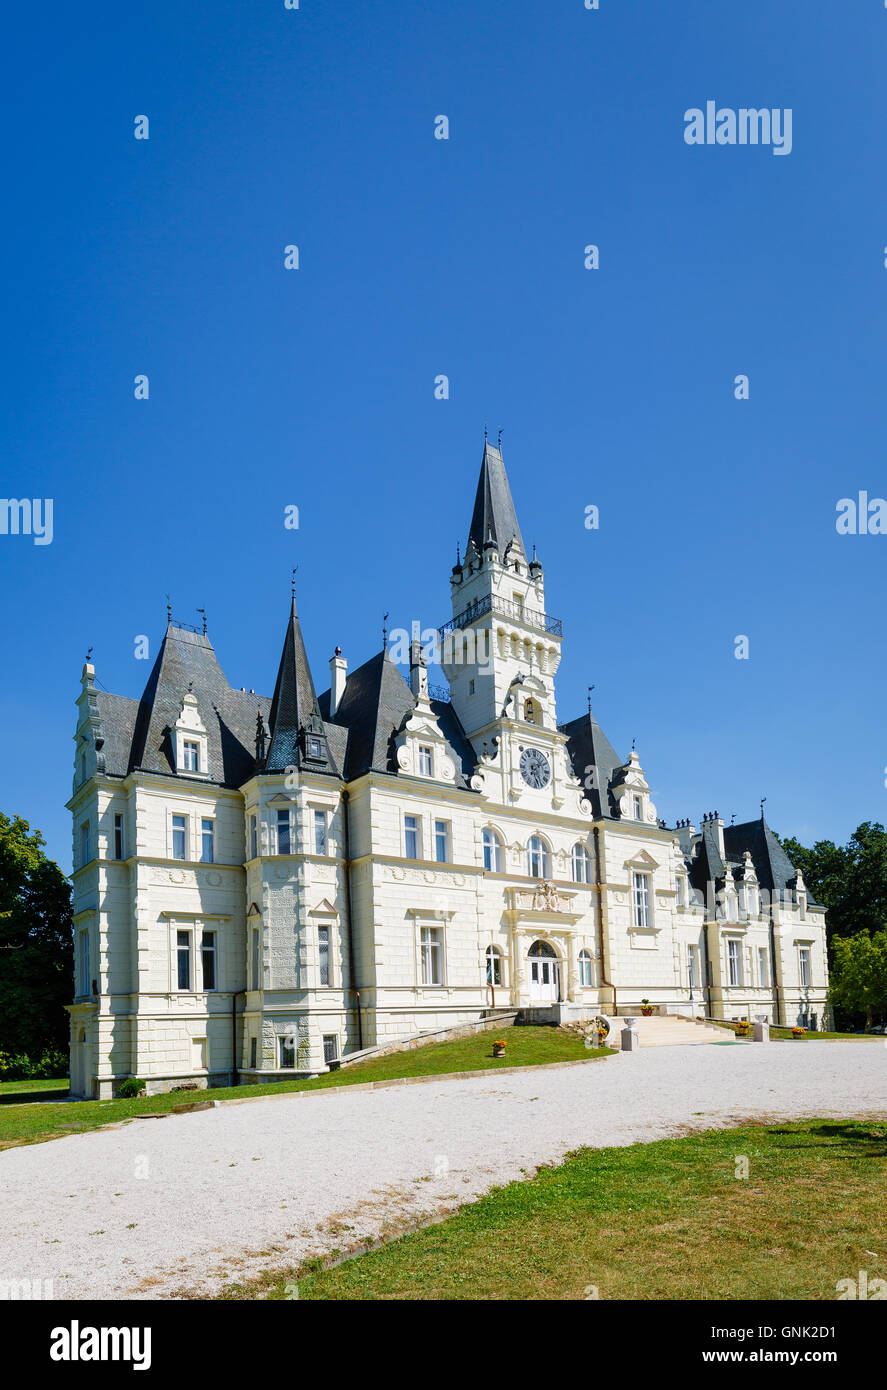 Budmerice, Slowakei - 25. August 2016: Budmerice Herrenhaus oder Palffy manor Stockfoto